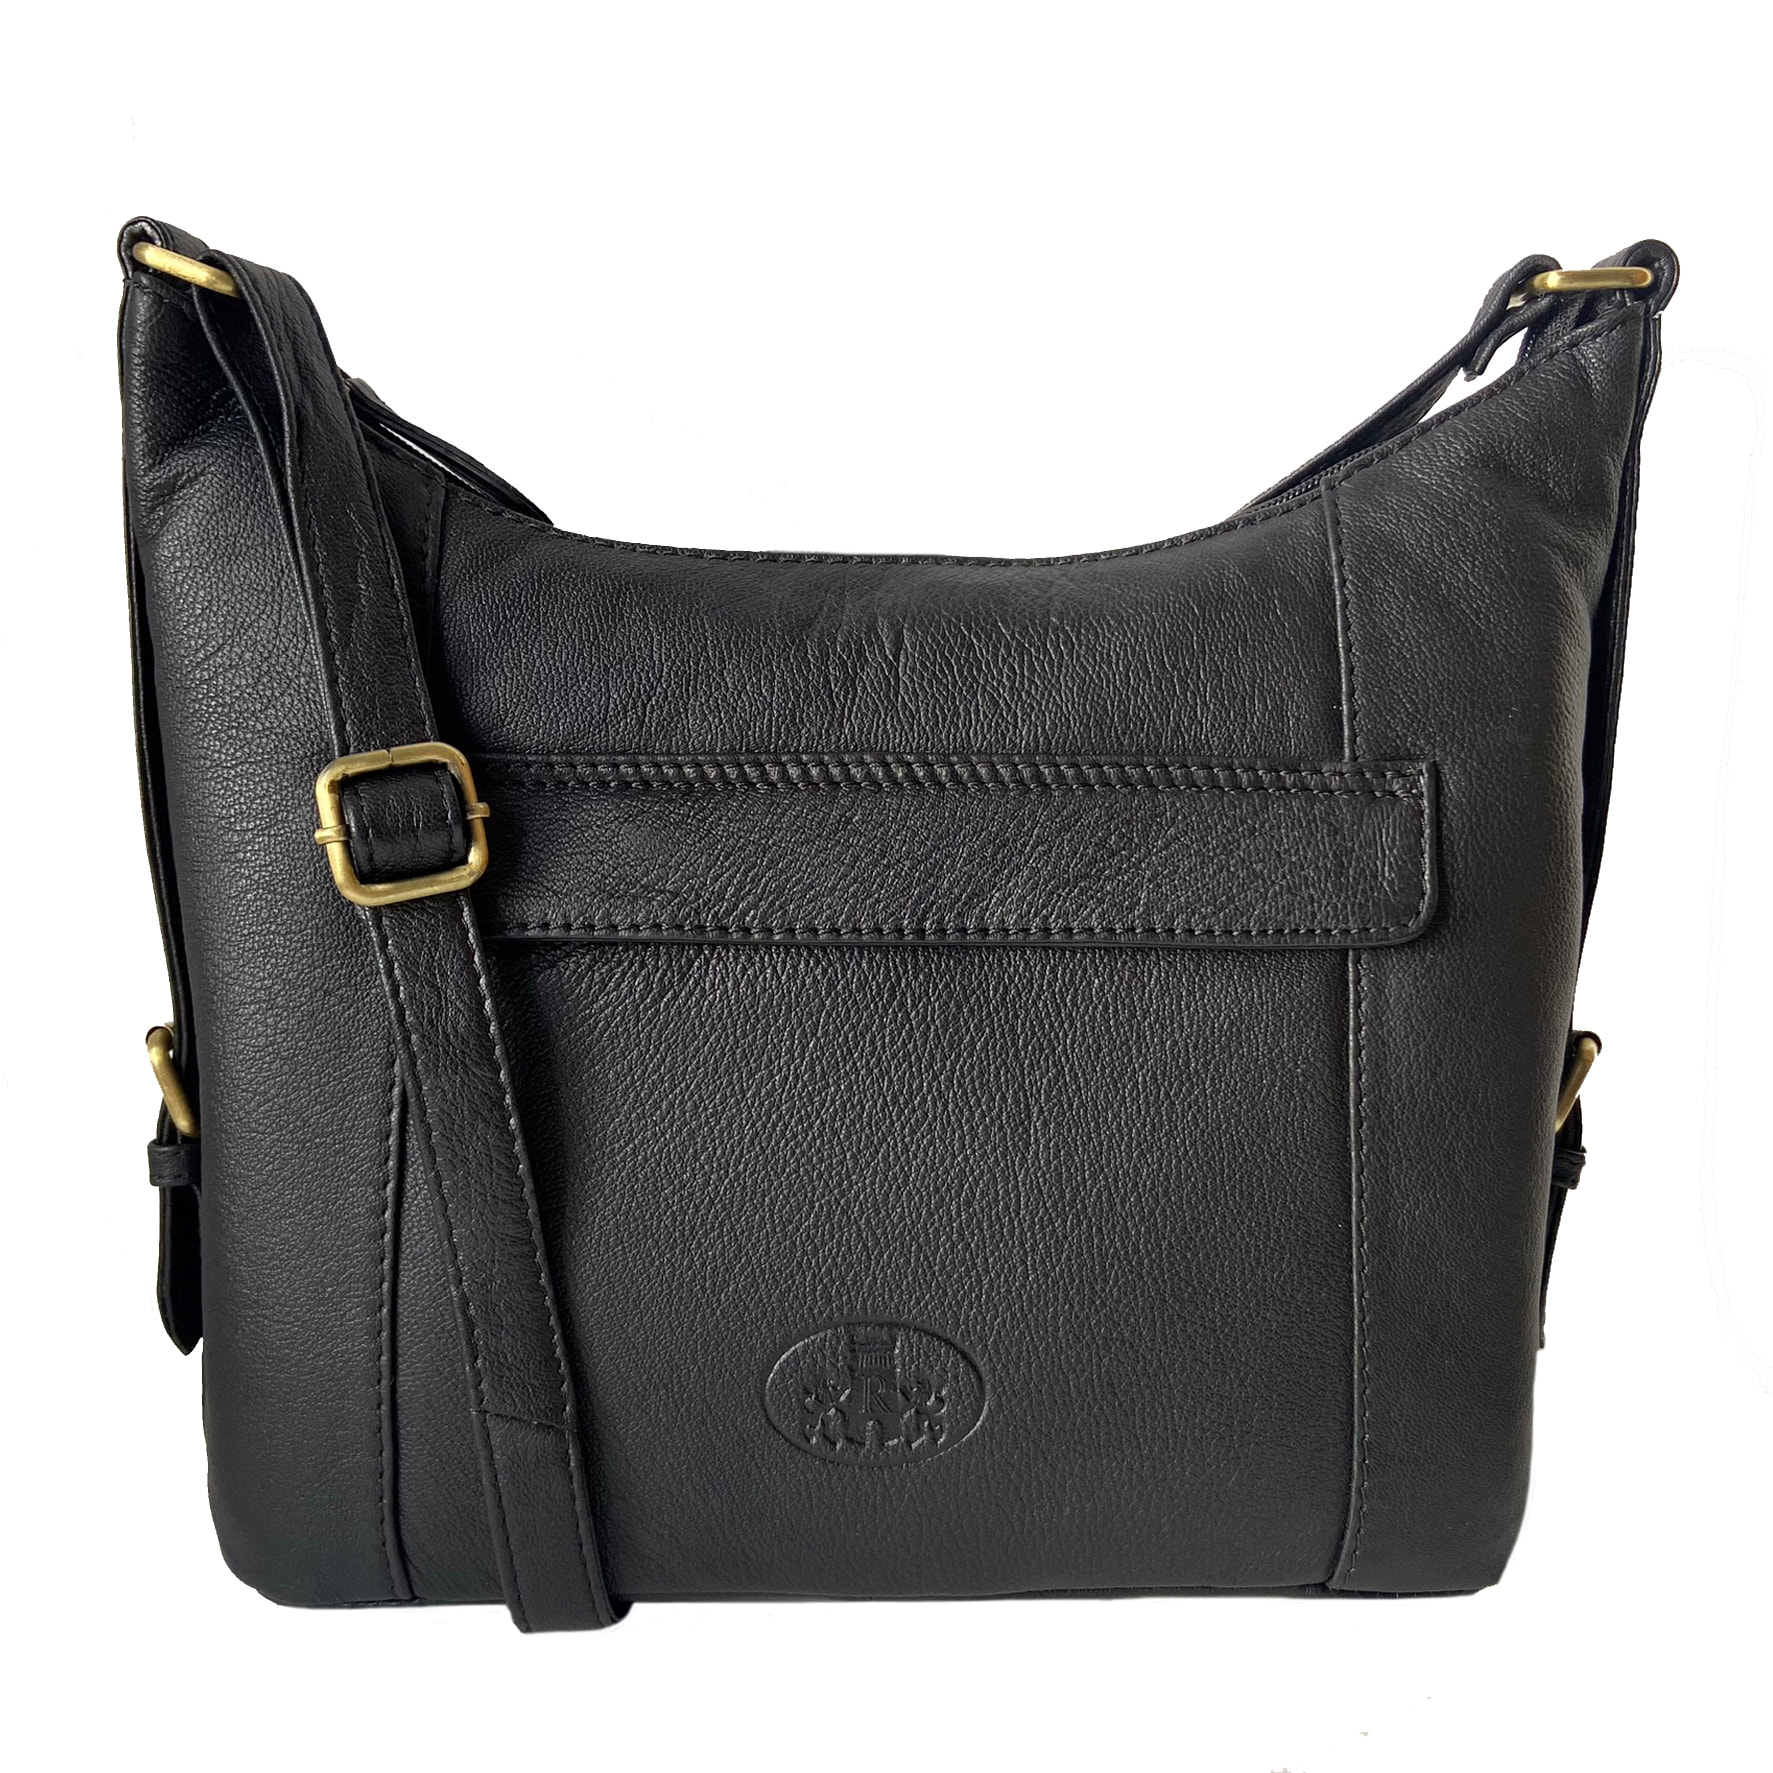 Rowallan Black Leather Handbag, Shoulder Bag, Cross Body Bag